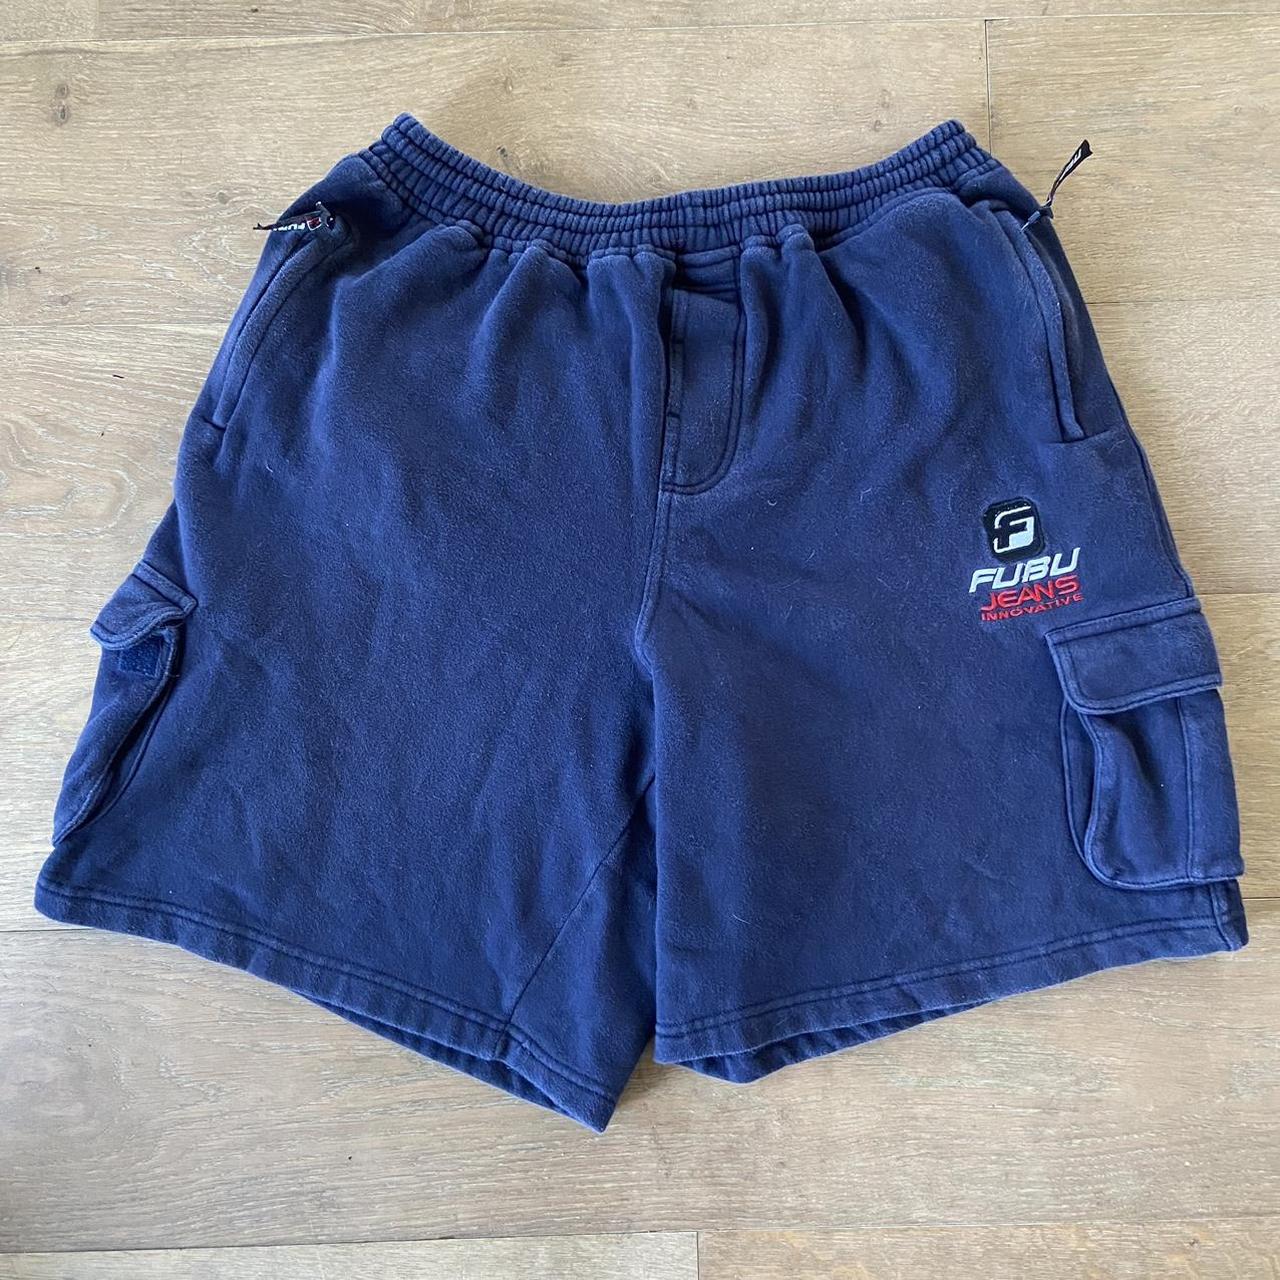 FUBU Men's Navy and Blue Shorts | Depop